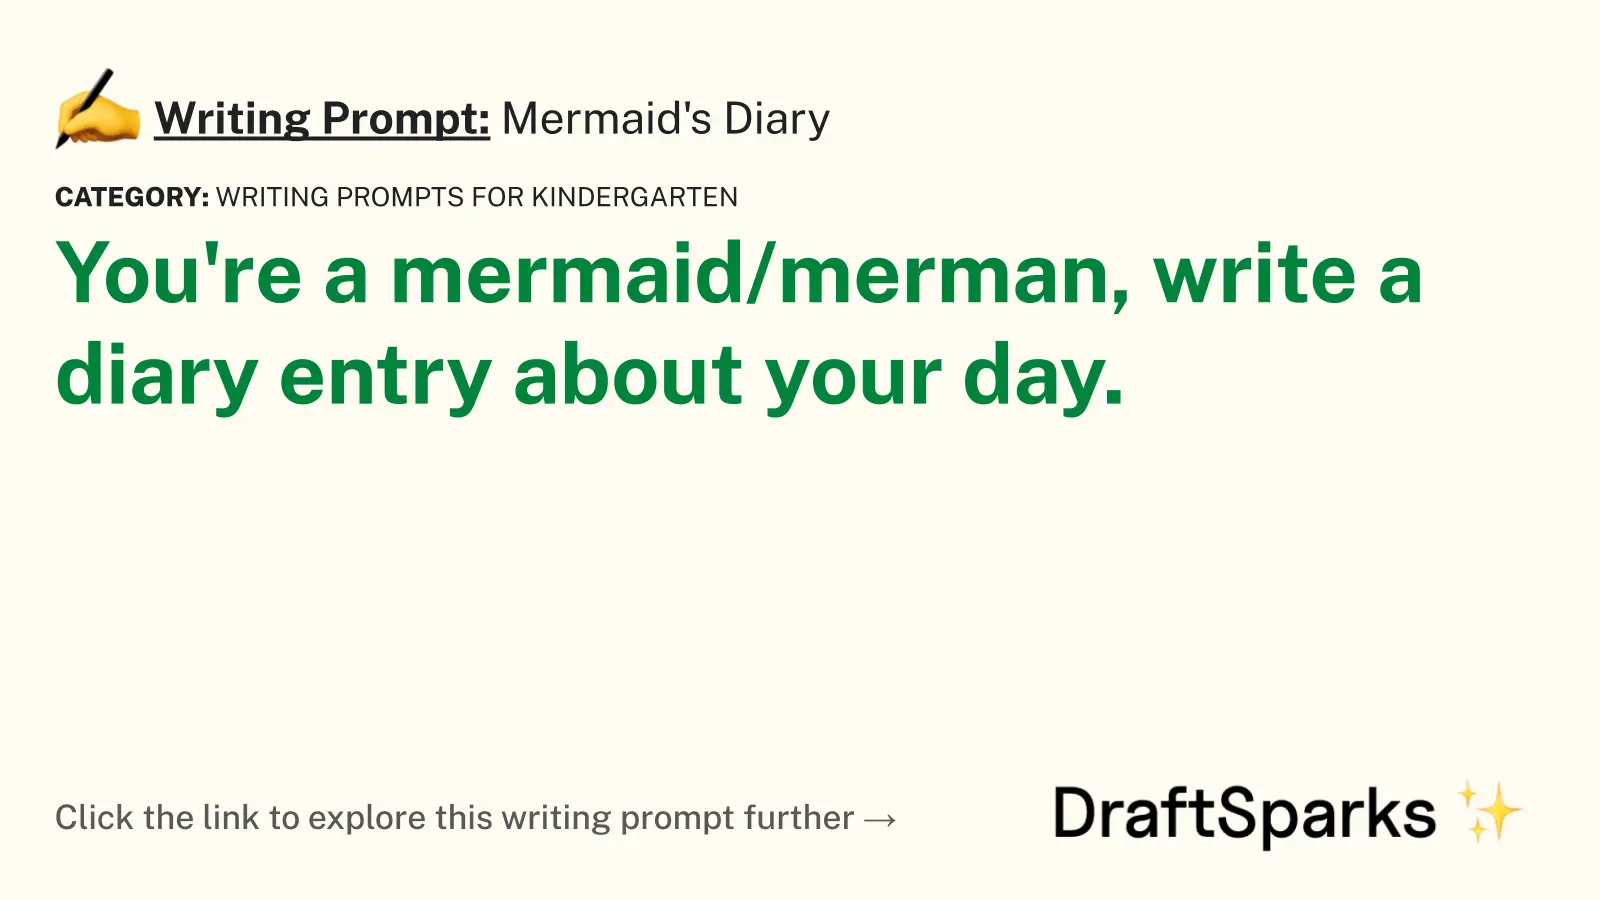 Mermaid’s Diary